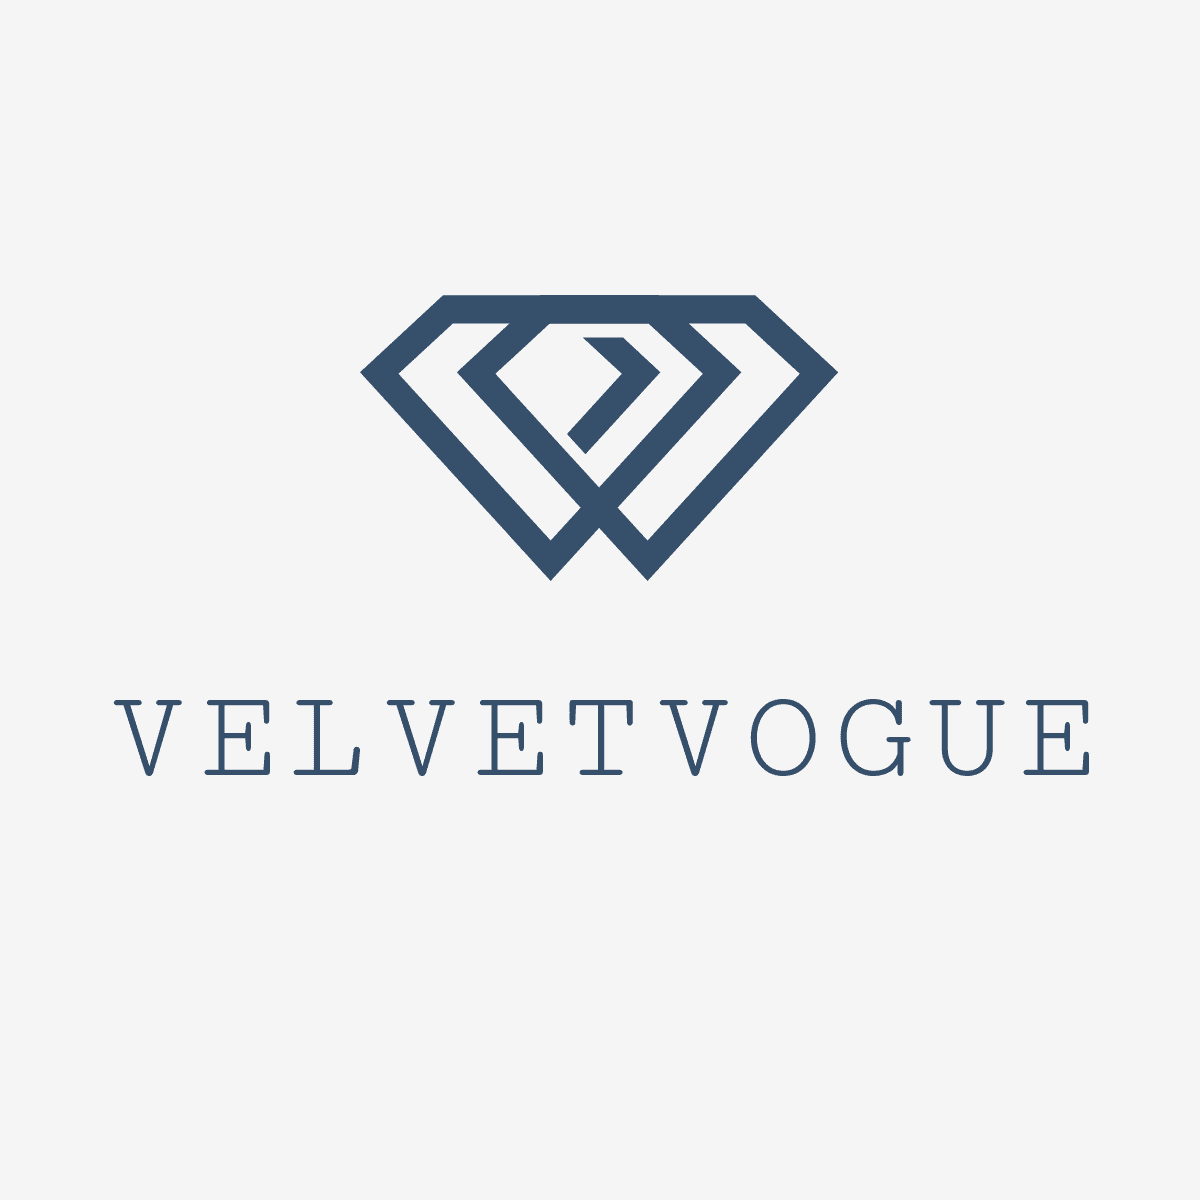 VelvetVogue